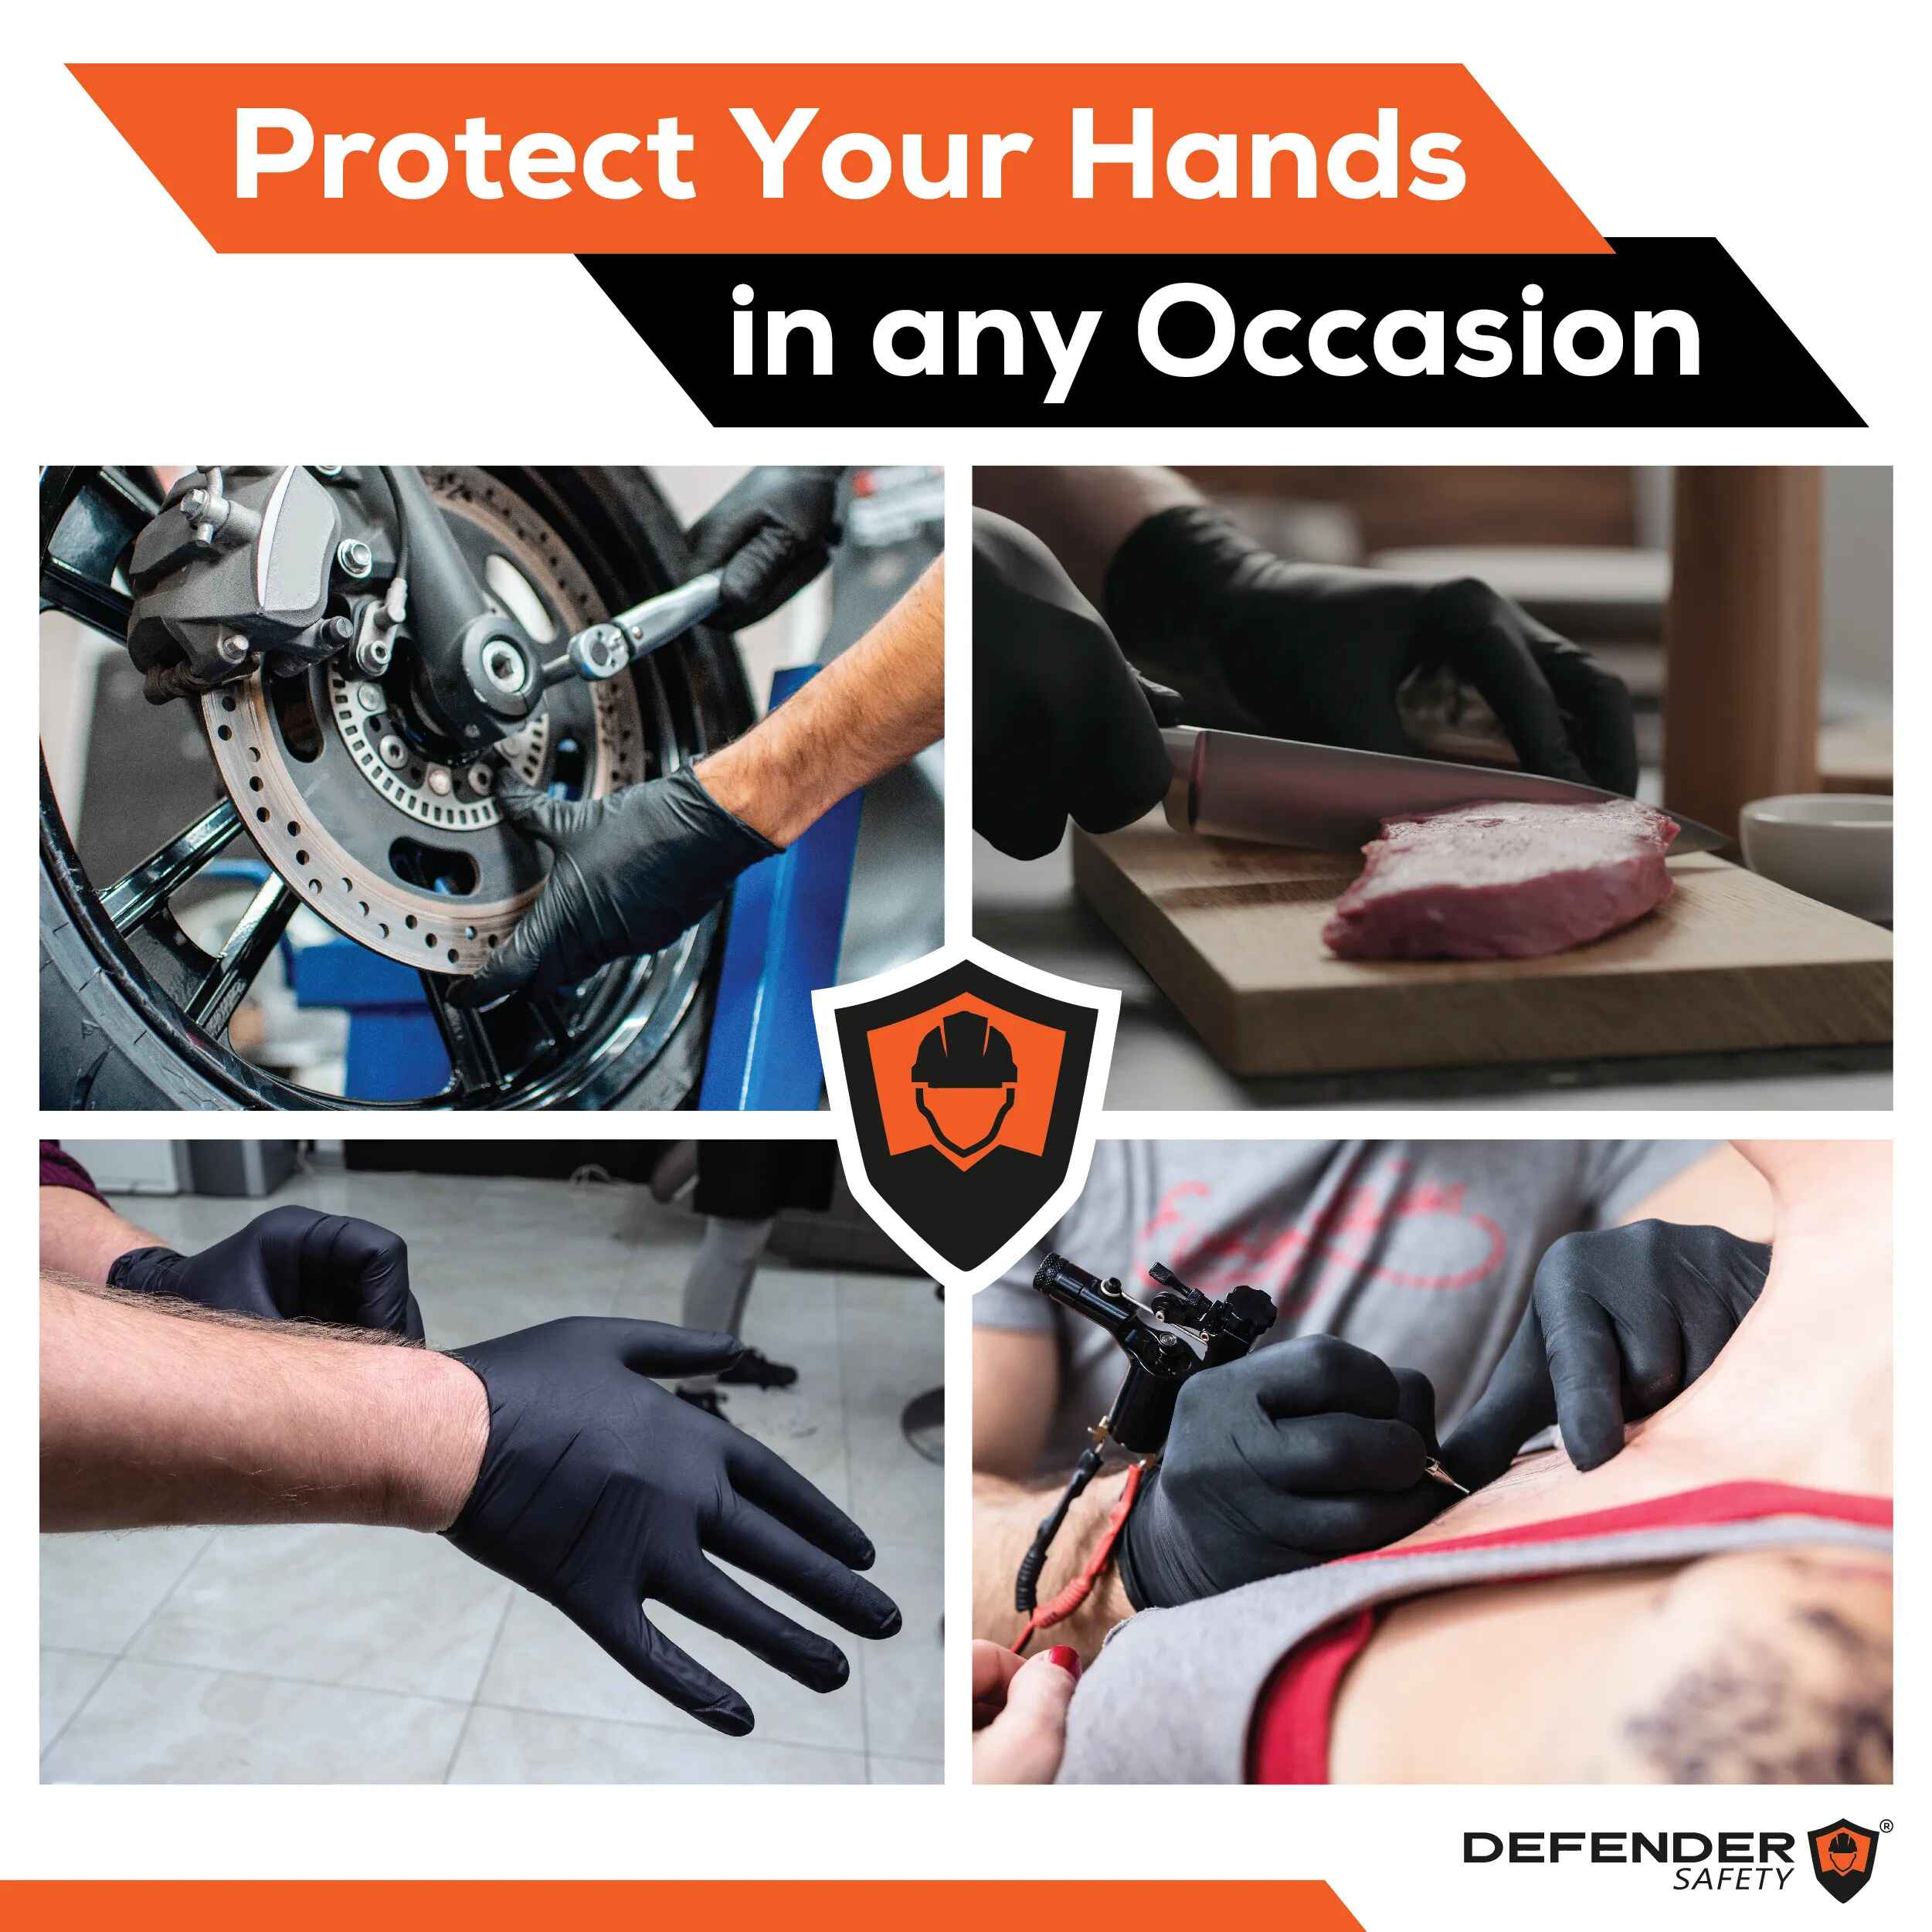 6 Mil Black Nitrile Gloves, Heavy Duty, Chemical Resistant, Powder Free - Defender Safety